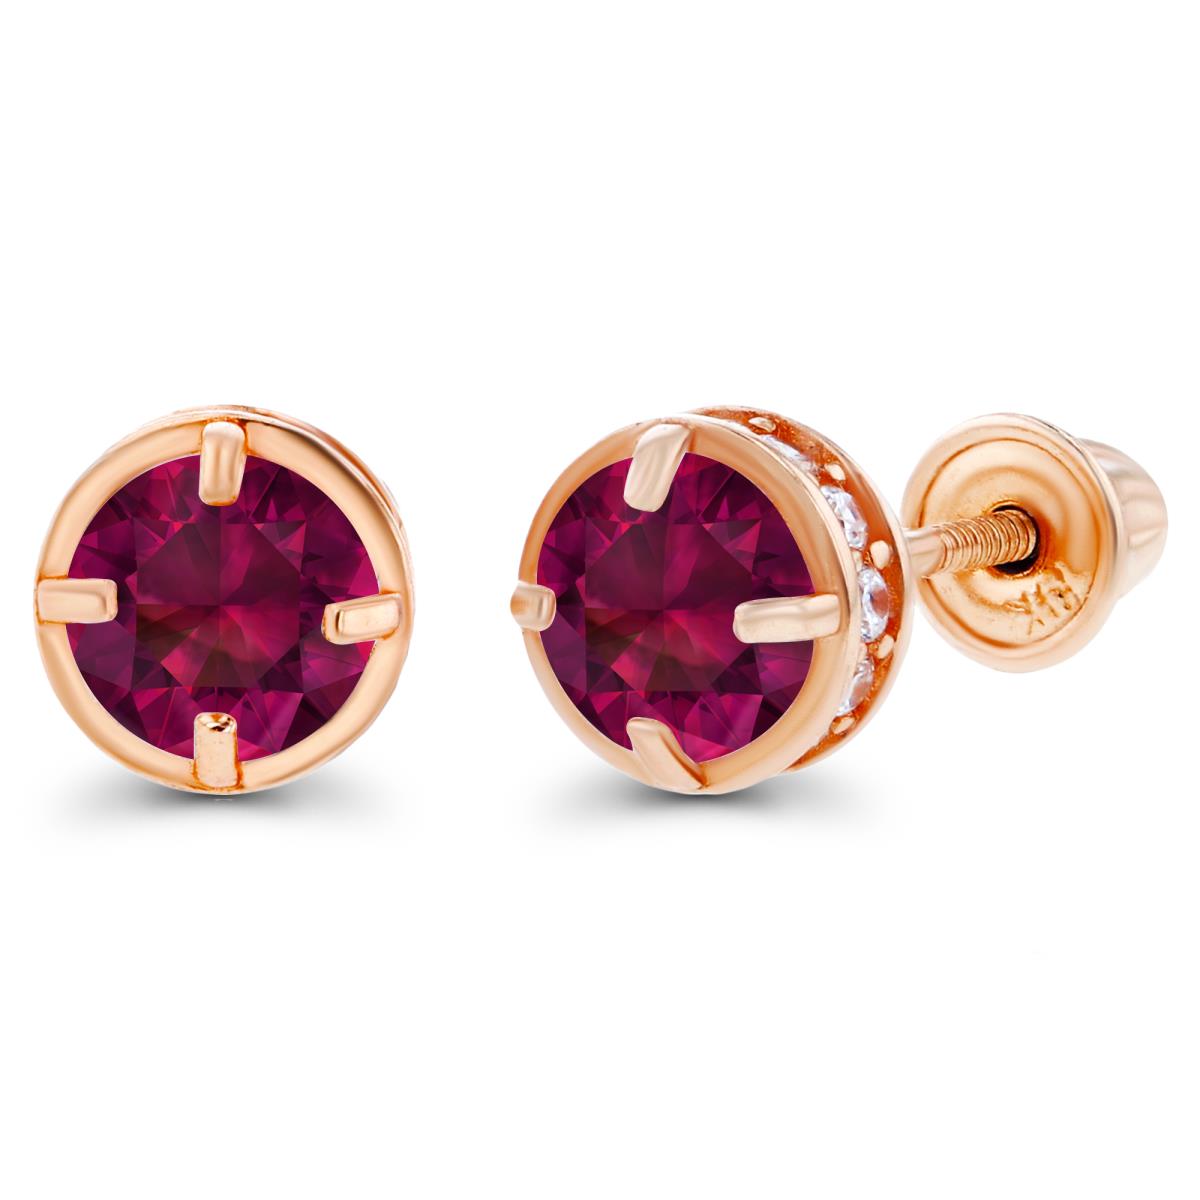 14K Rose Gold 4mm Created Ruby & 1mm Created White Sapphire Basket Screwback Earrings